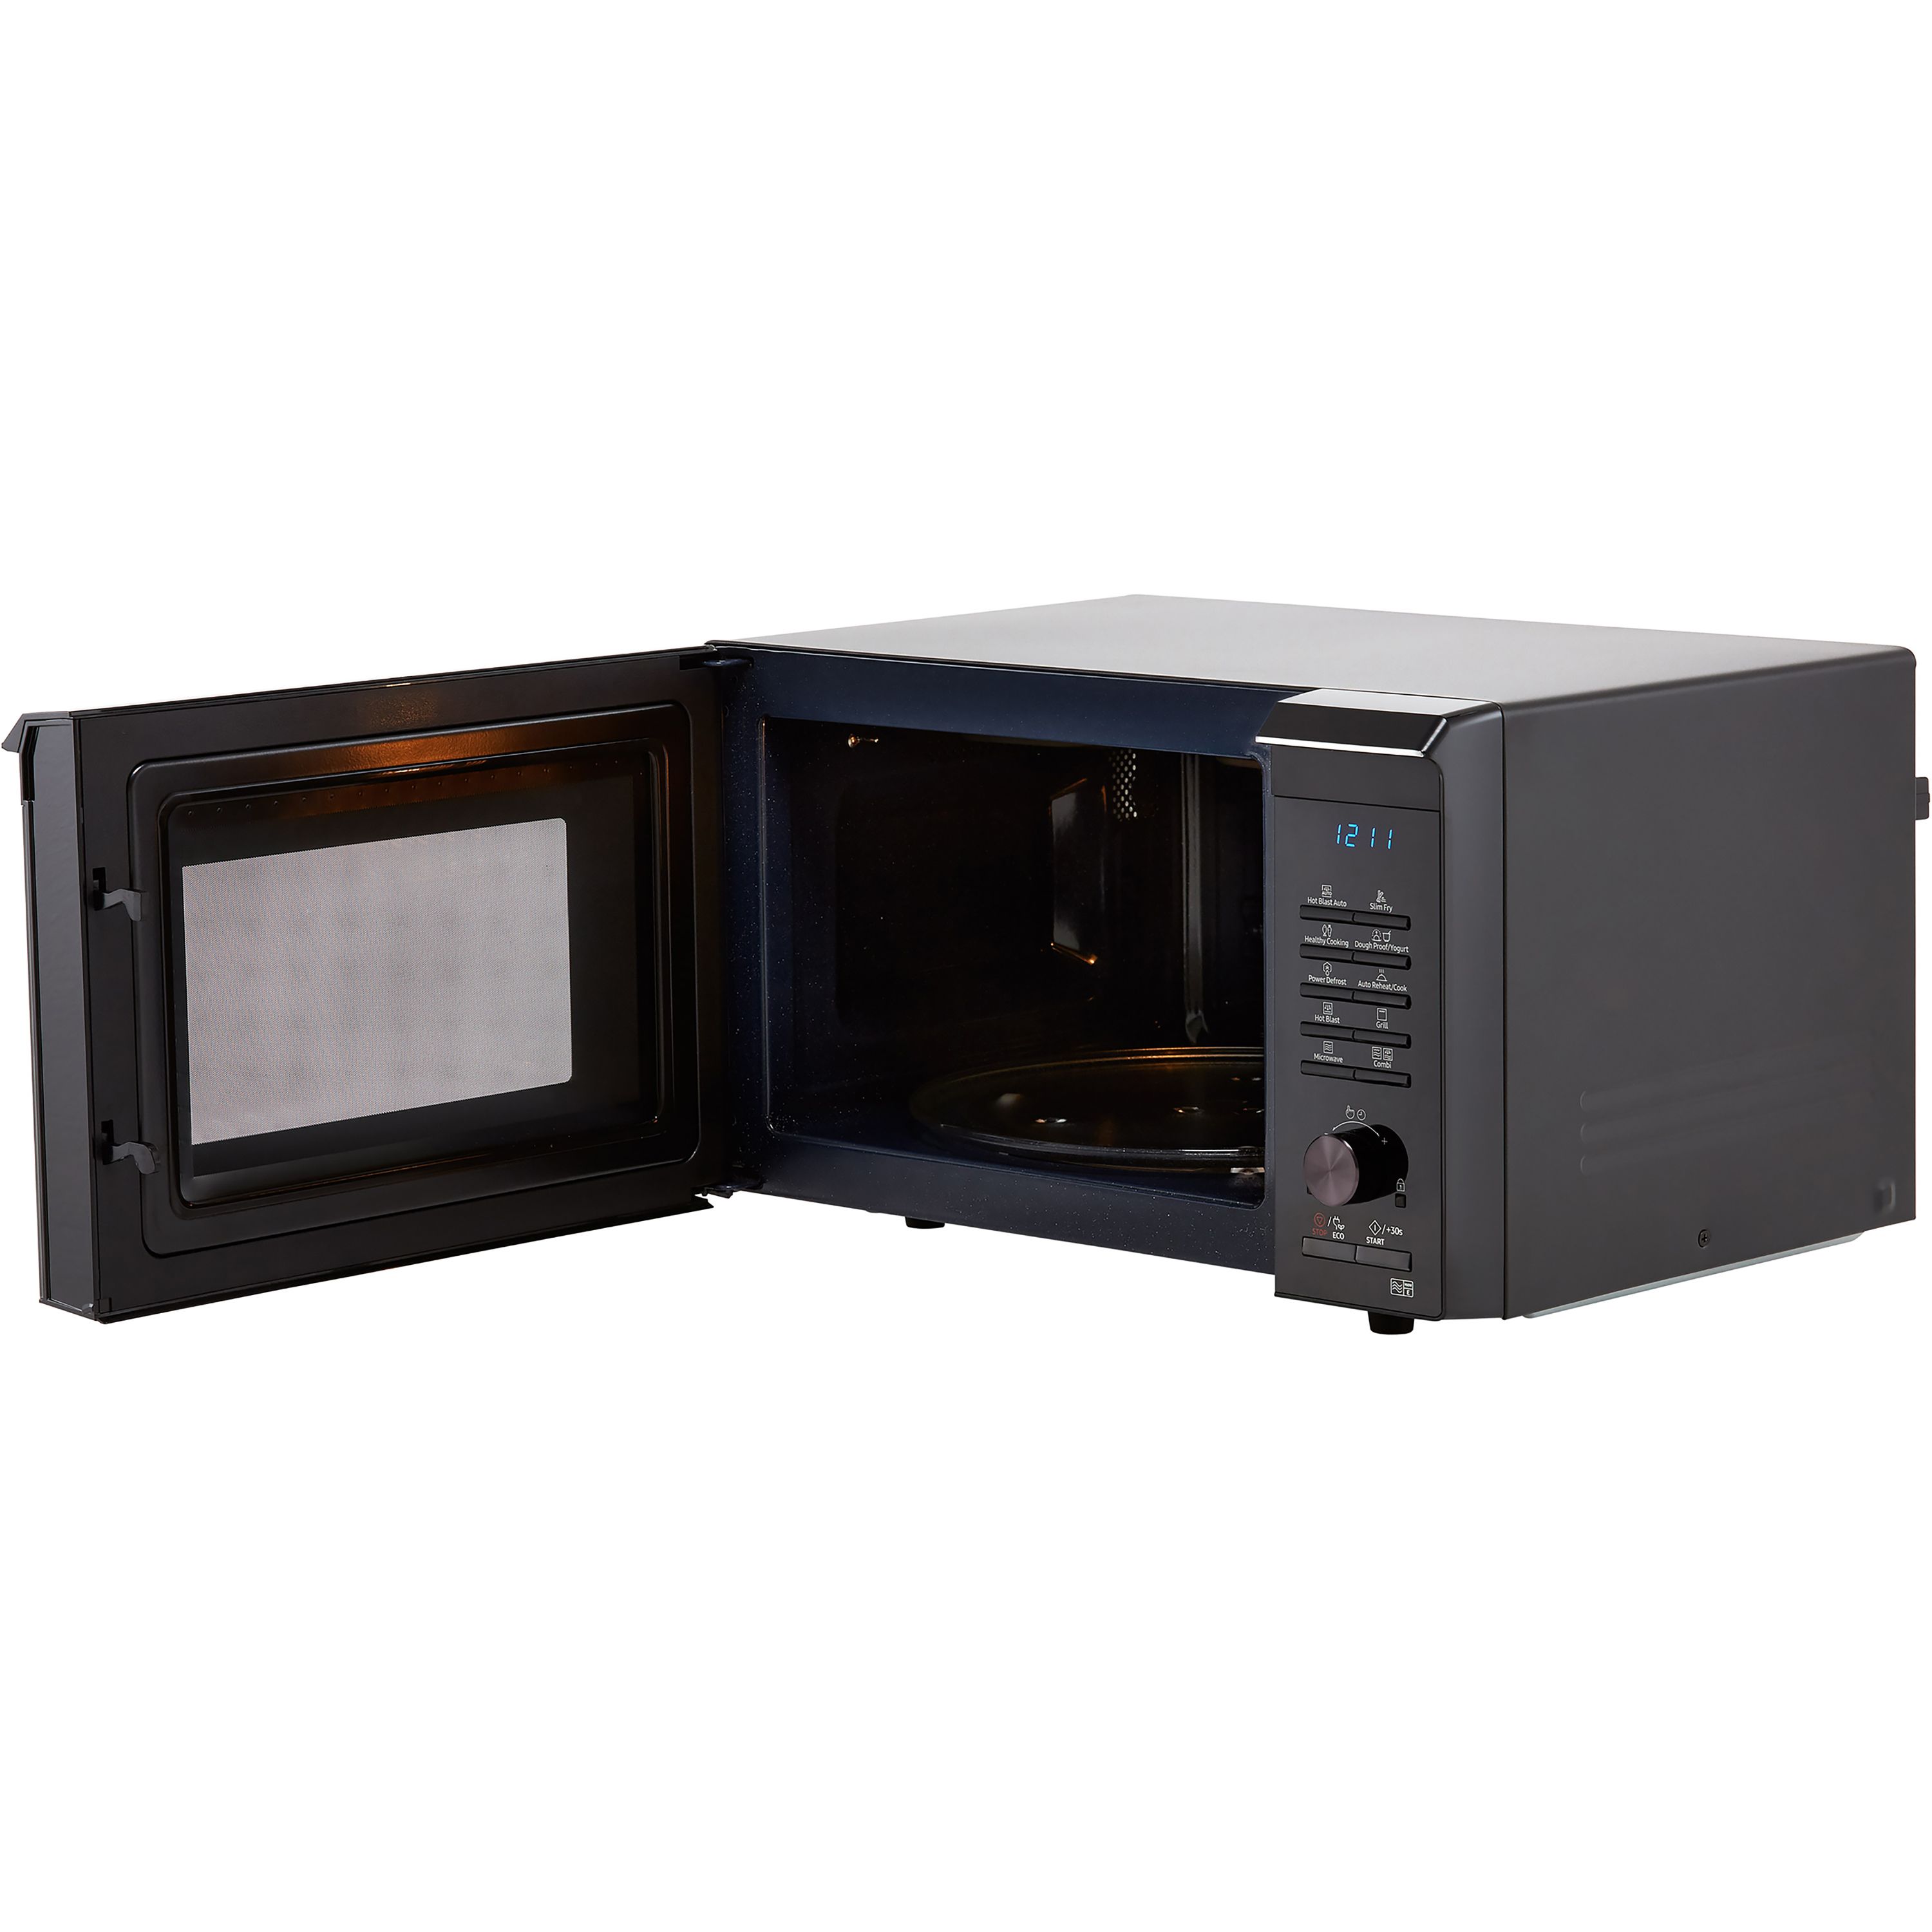 Samsung Easy View MC28M6055CK_BK 28L Freestanding Microwave - Black